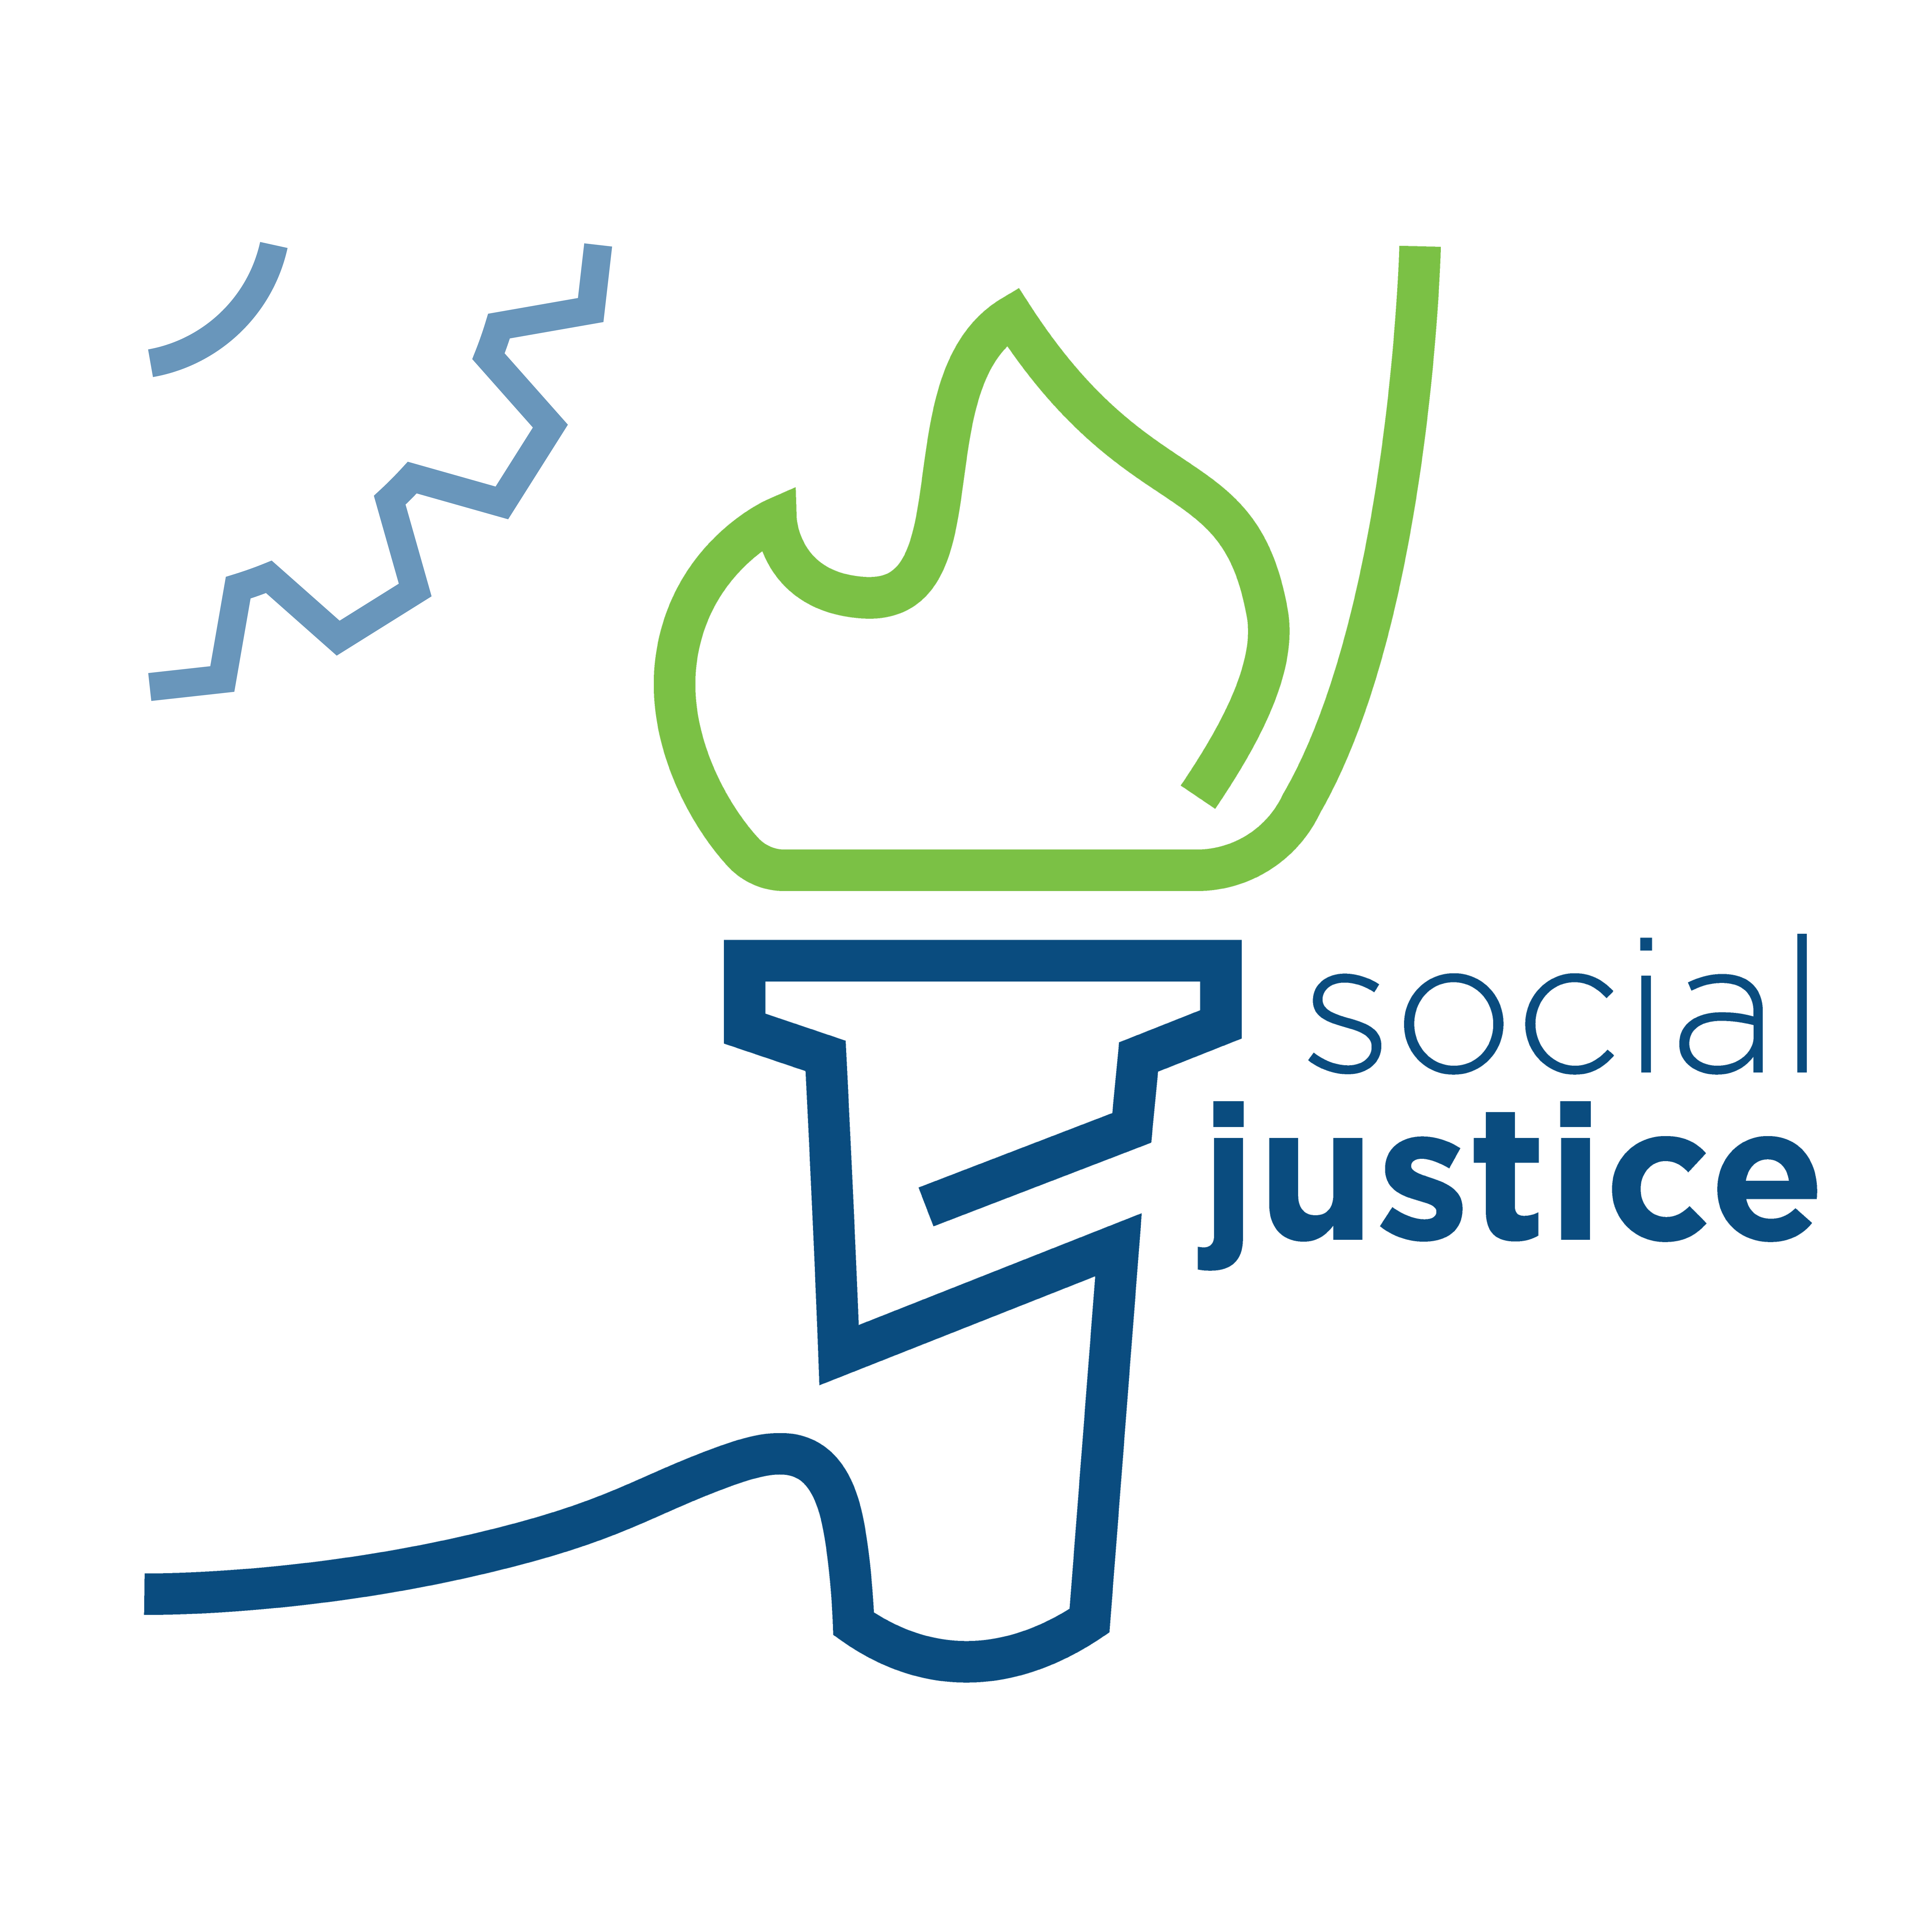 Social justice logo